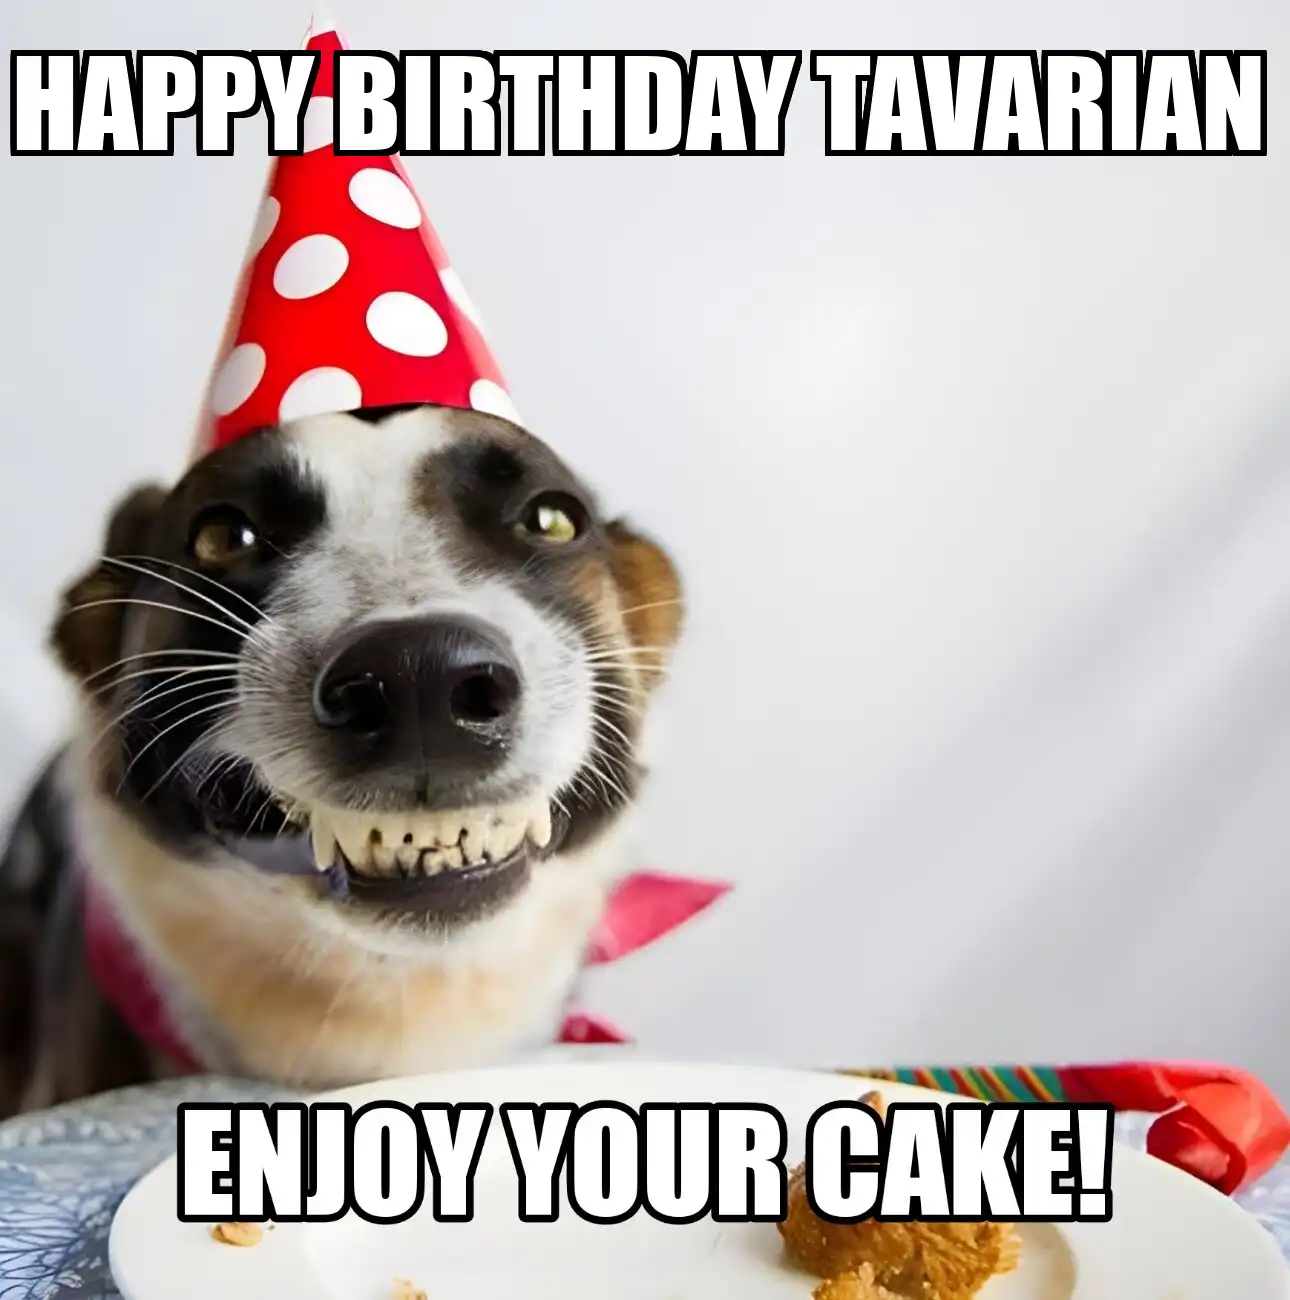 Happy Birthday Tavarian Enjoy Your Cake Dog Meme